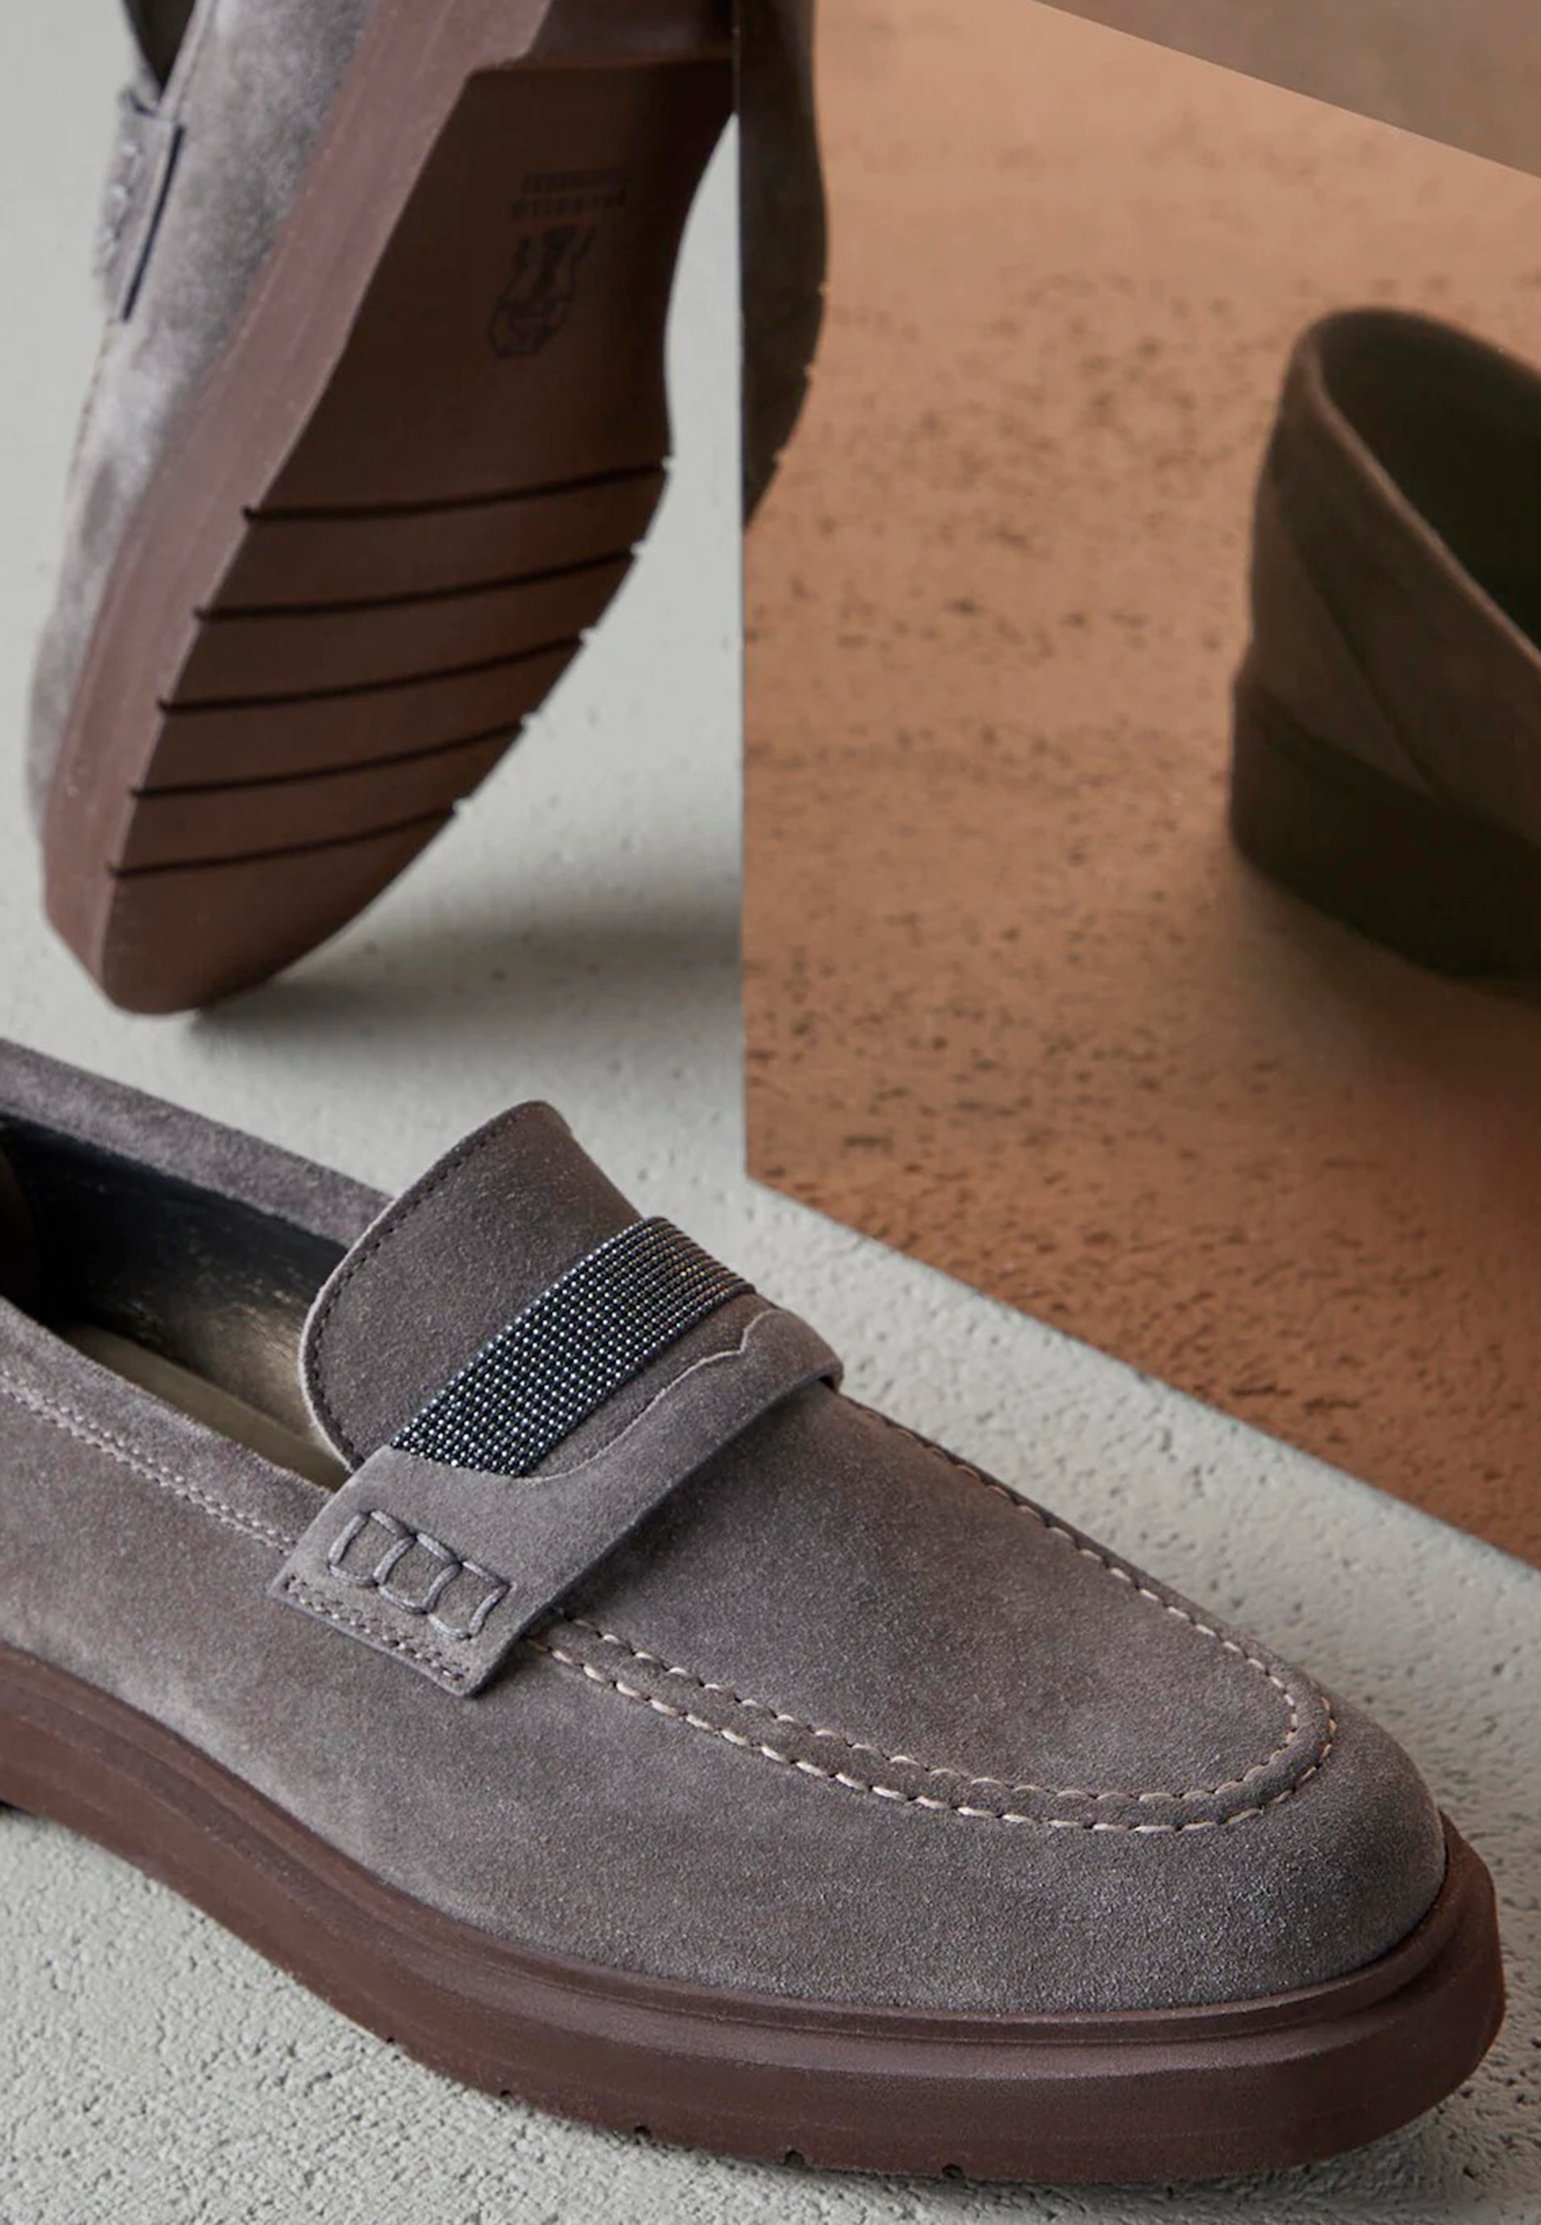 Loafers BRUNELLO CUCINELLI Color: grey (Code: 1191) in online store Allure